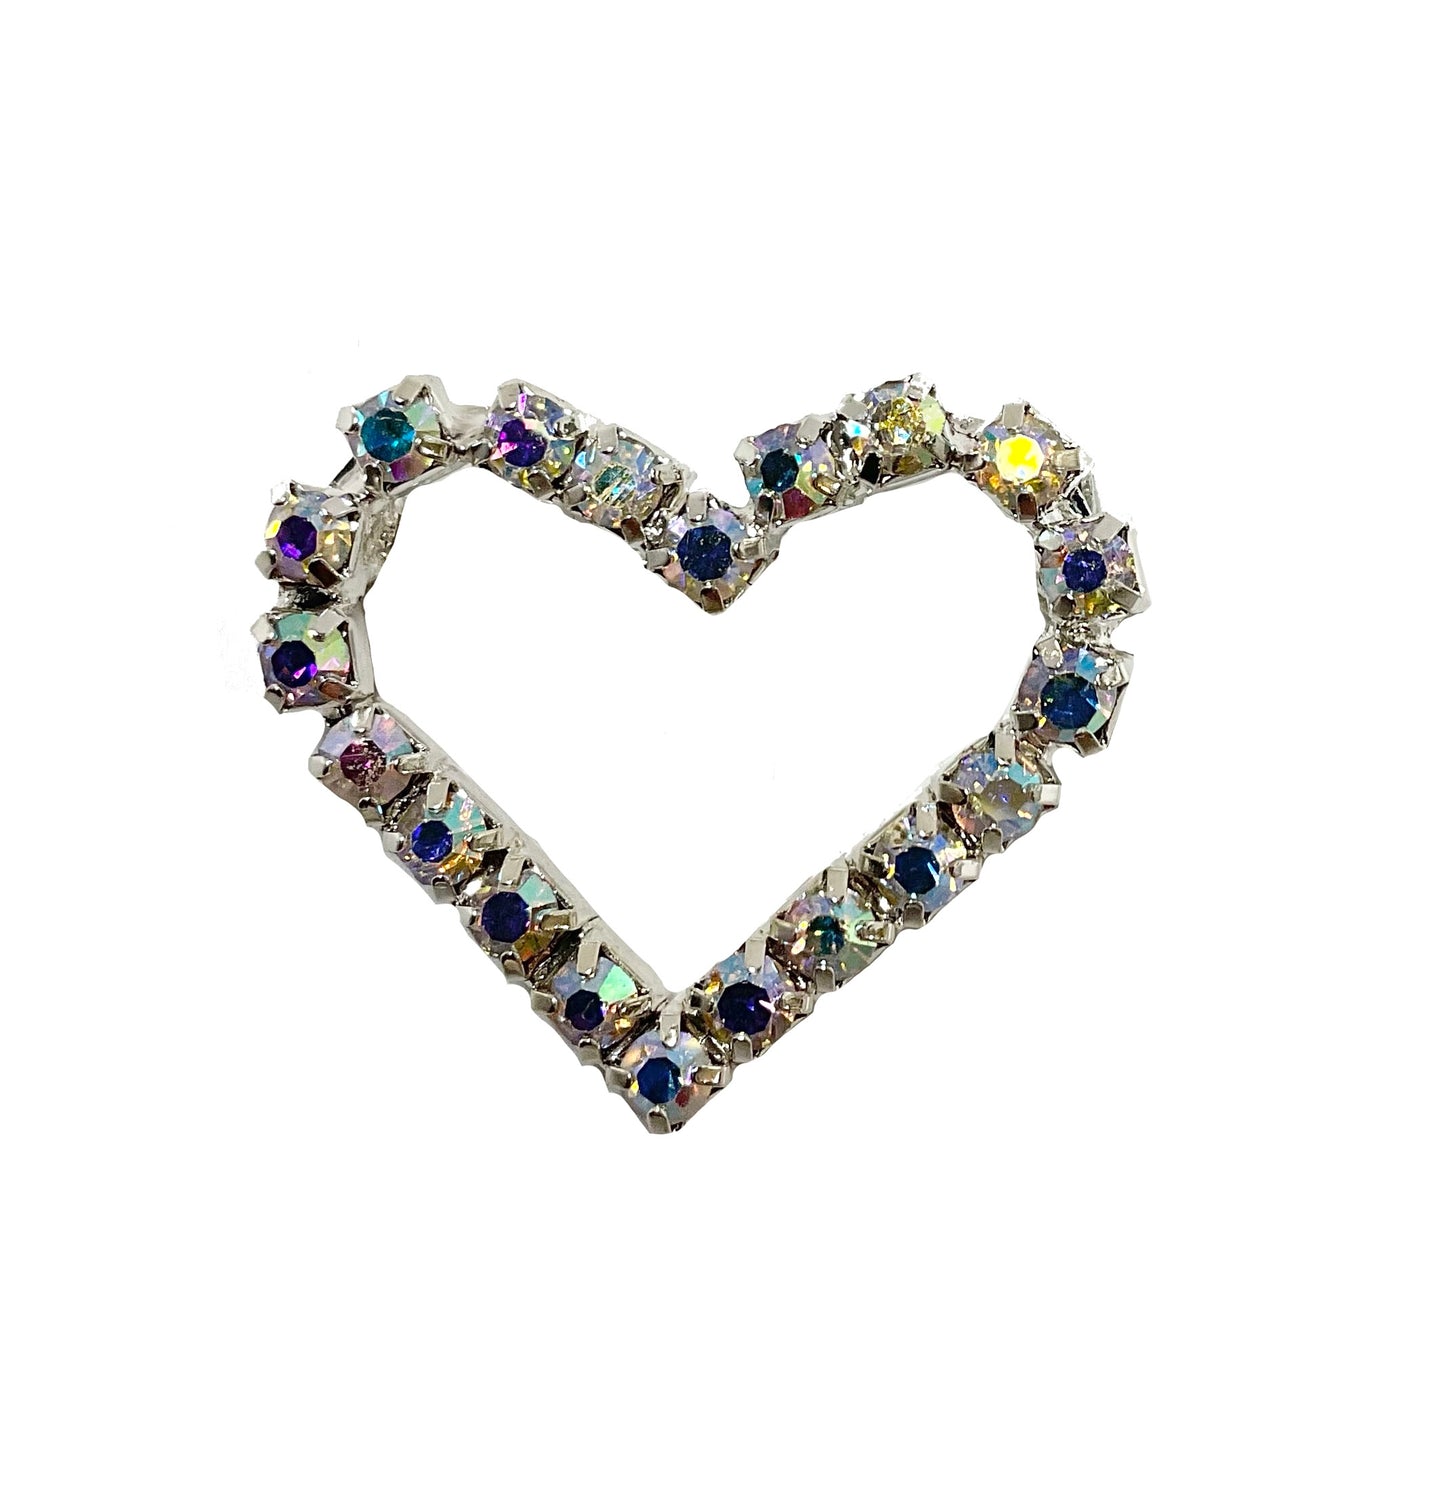 Heart Pin #28-11001AB (Aurora Borealis)